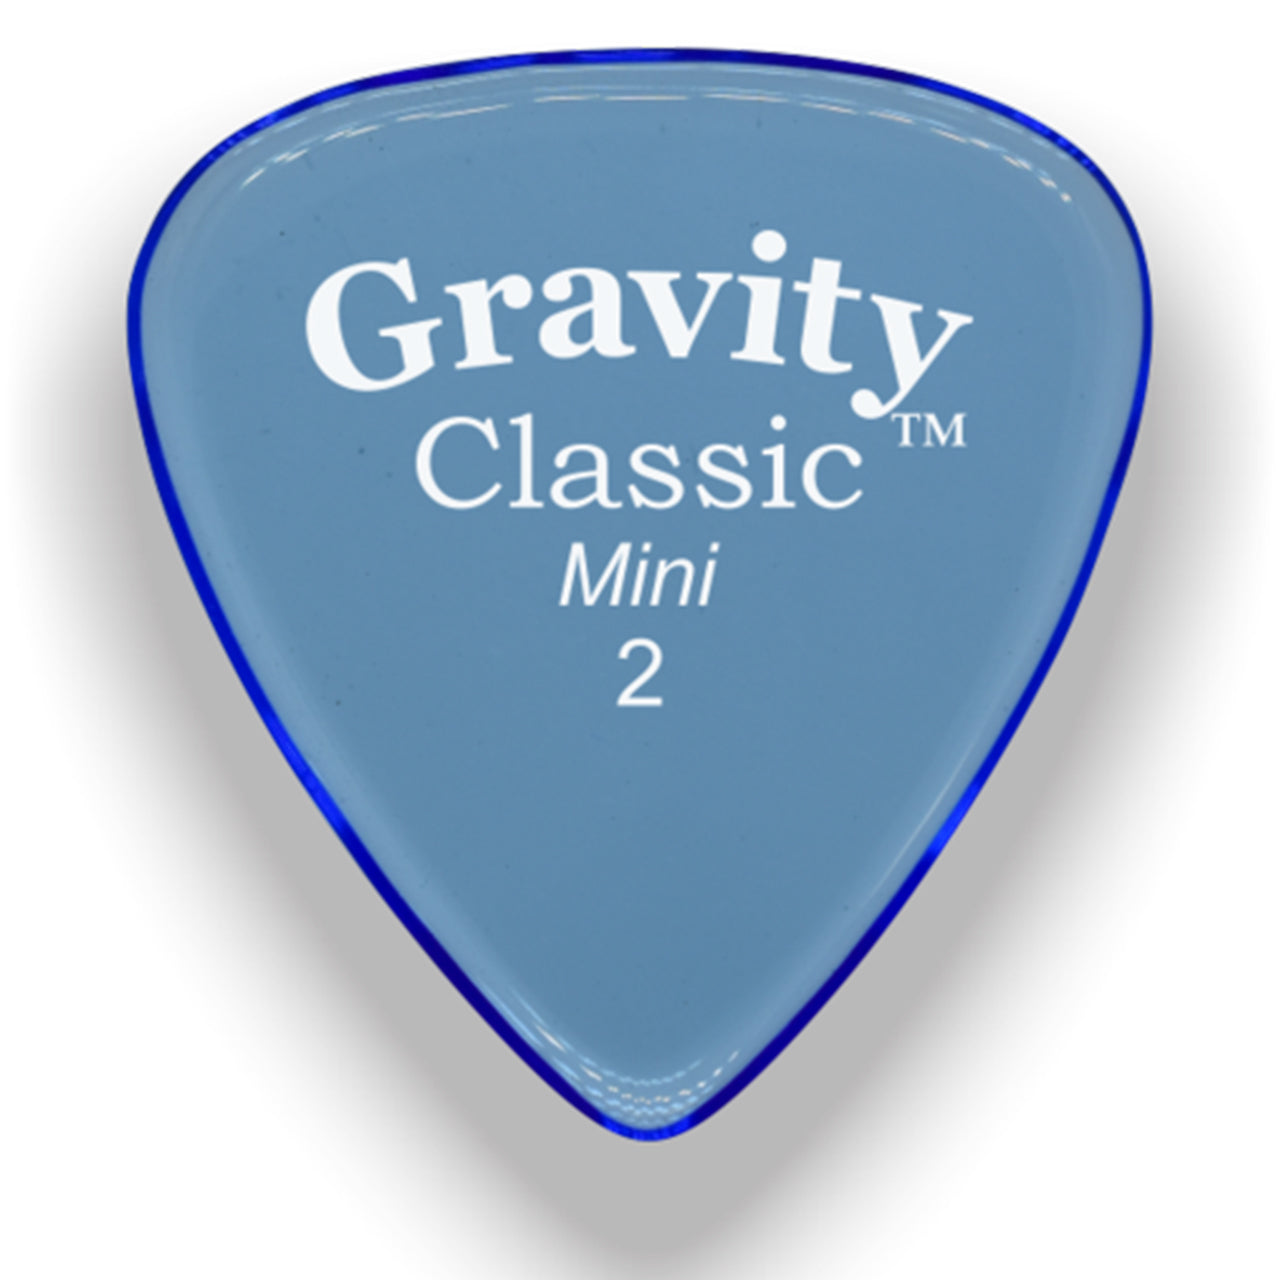 Gravity Picks Classic Mini Polished Guitar Pick, 2mm, Blue